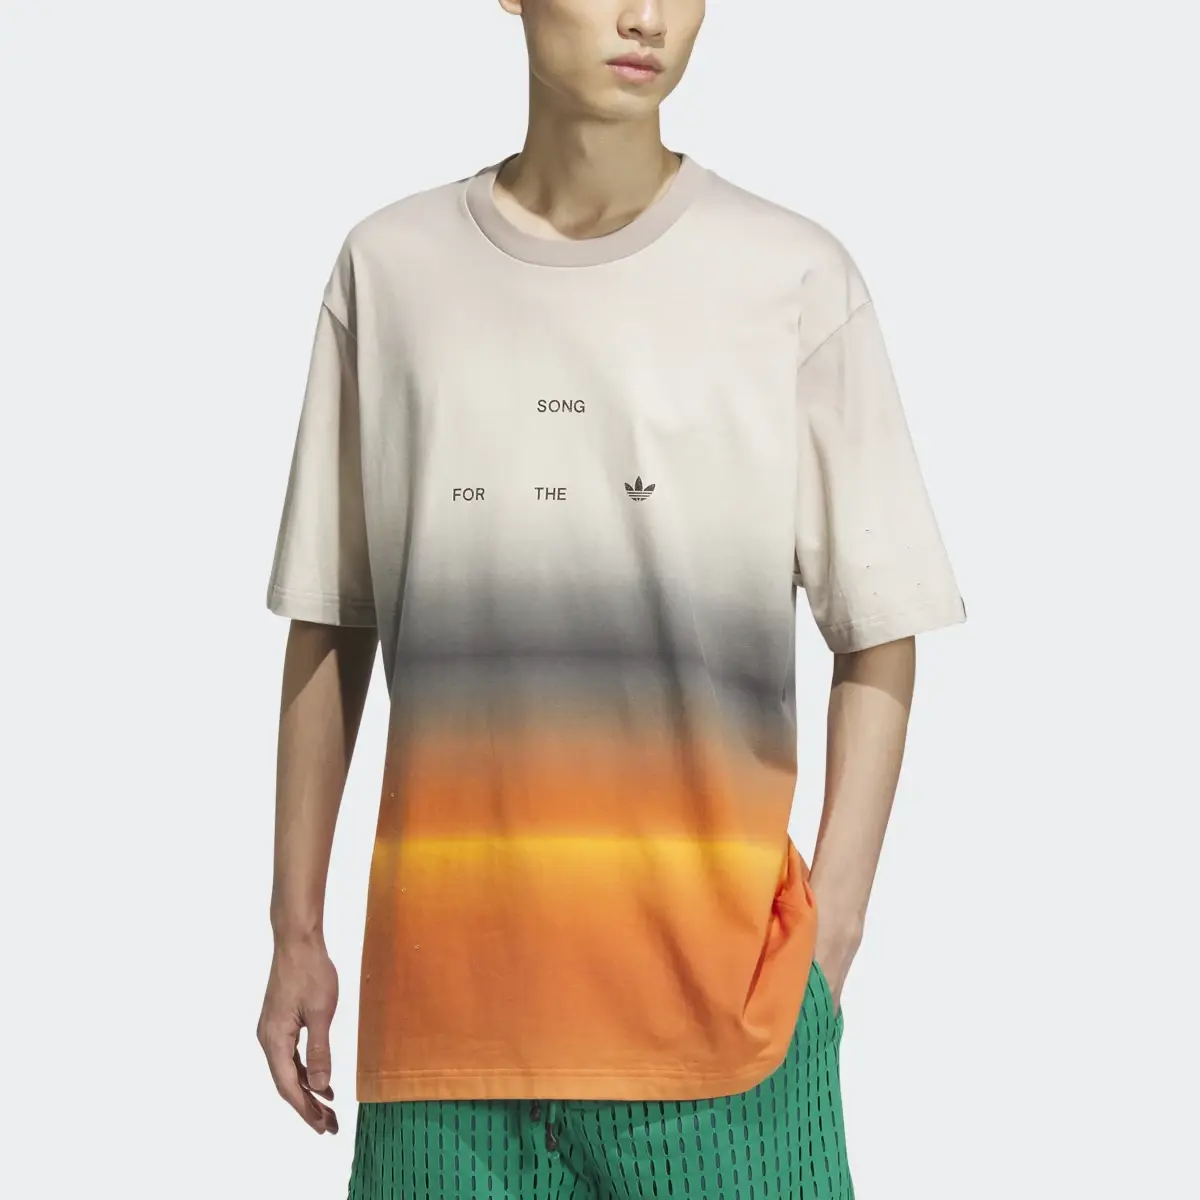 Adidas SFTM T-Shirt (Gender Neutral). 1